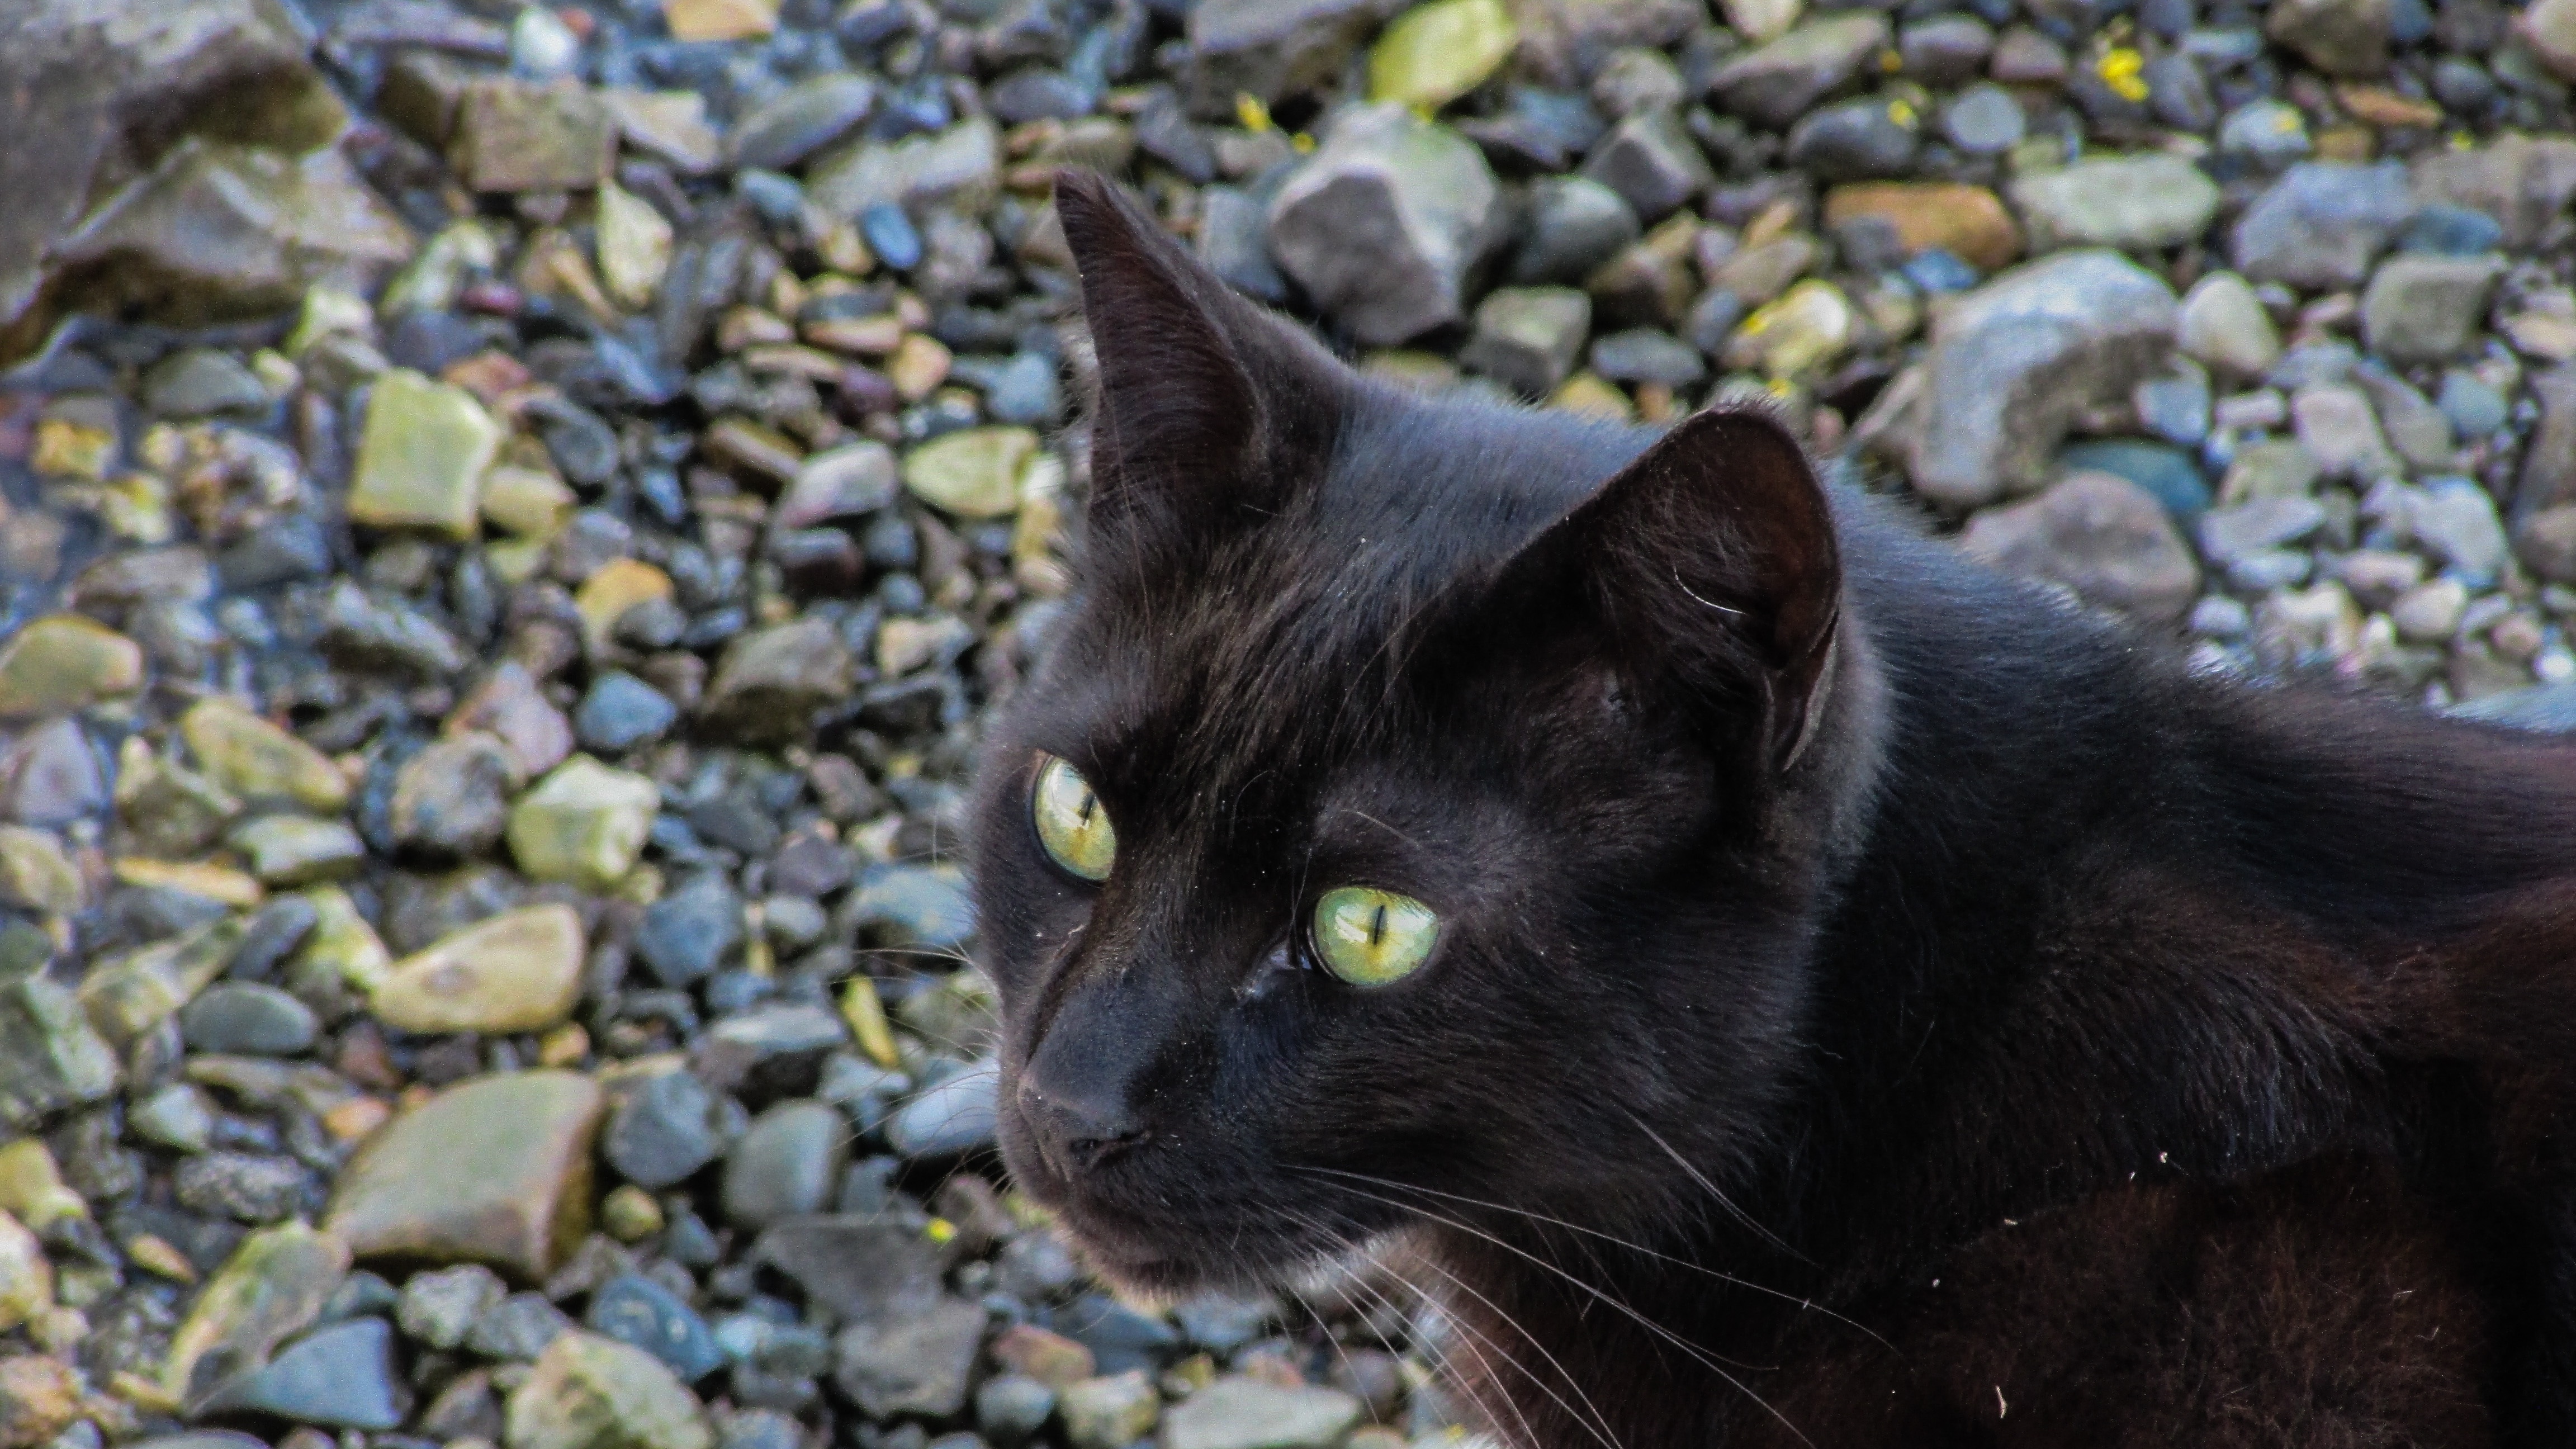 black short coated cat